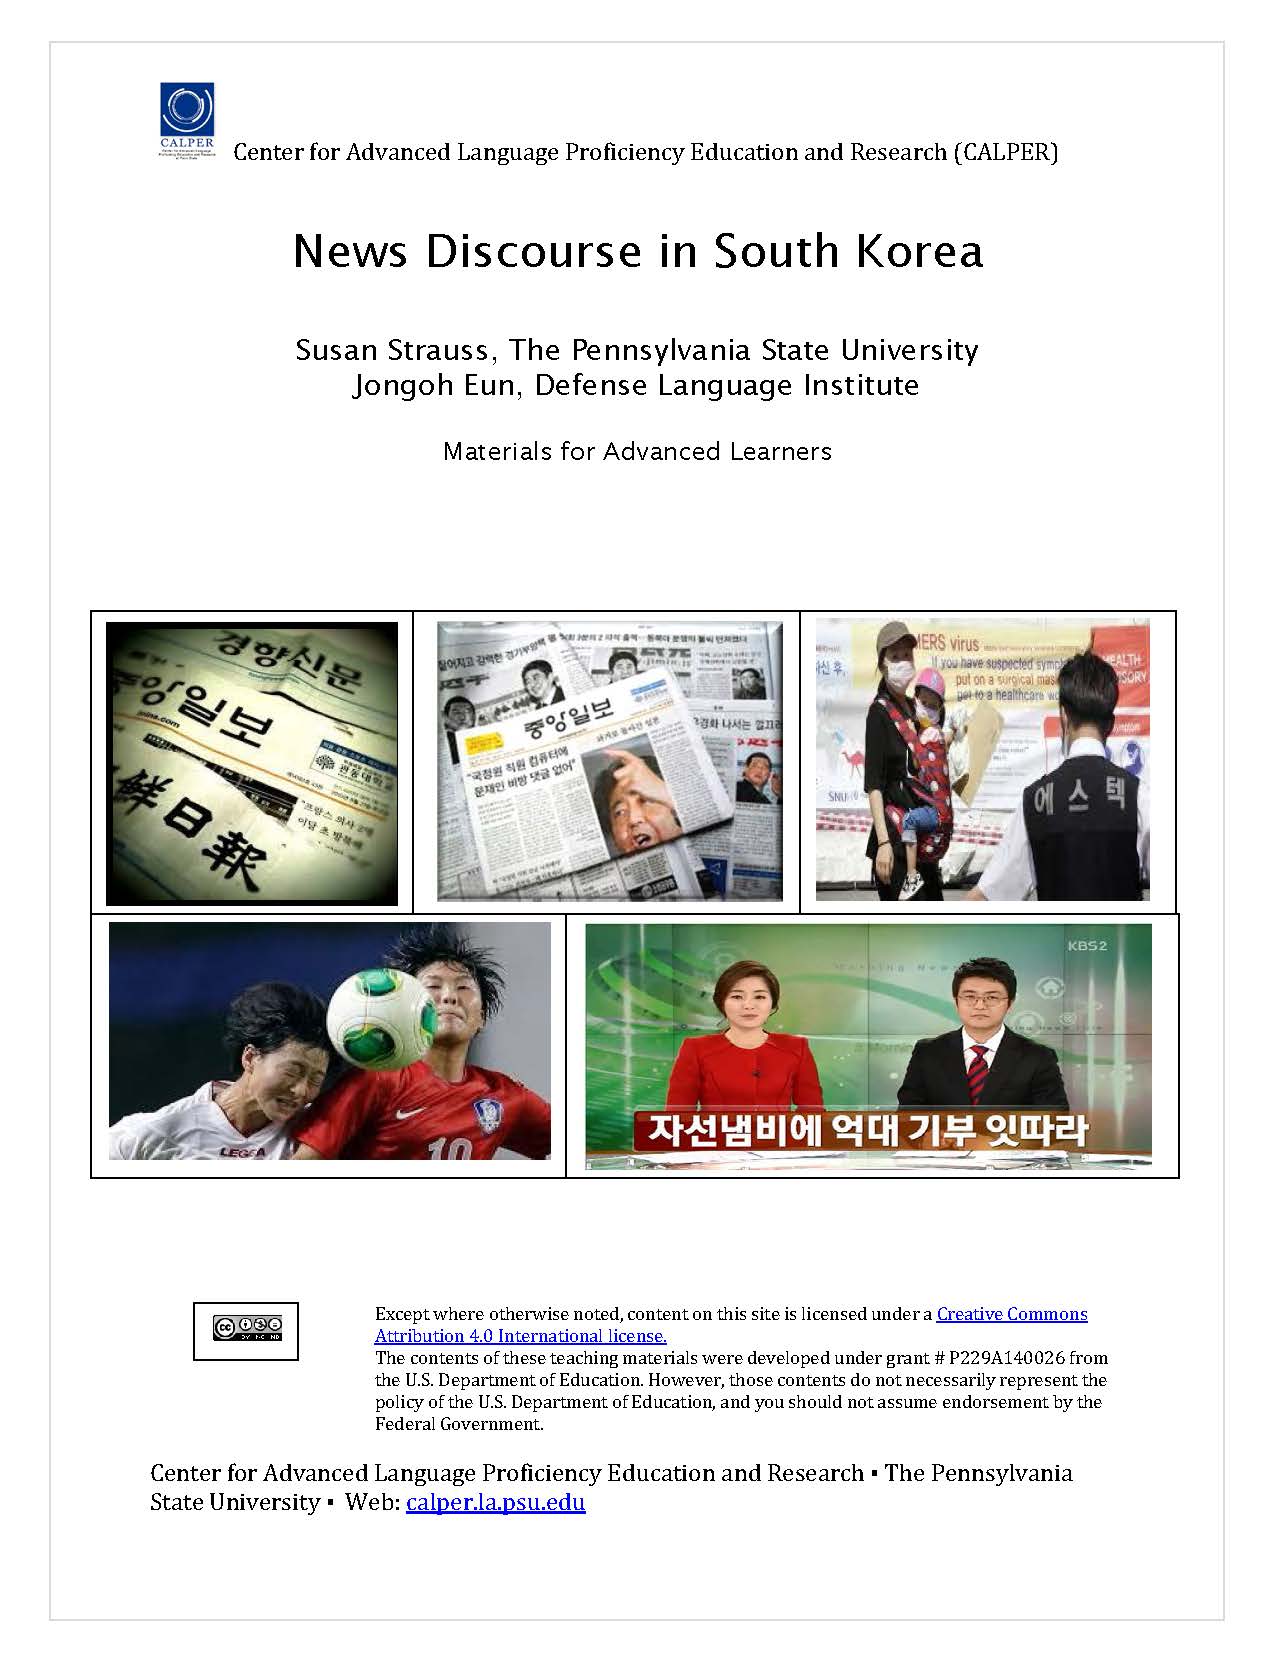 Korean News Discourse Cover Image